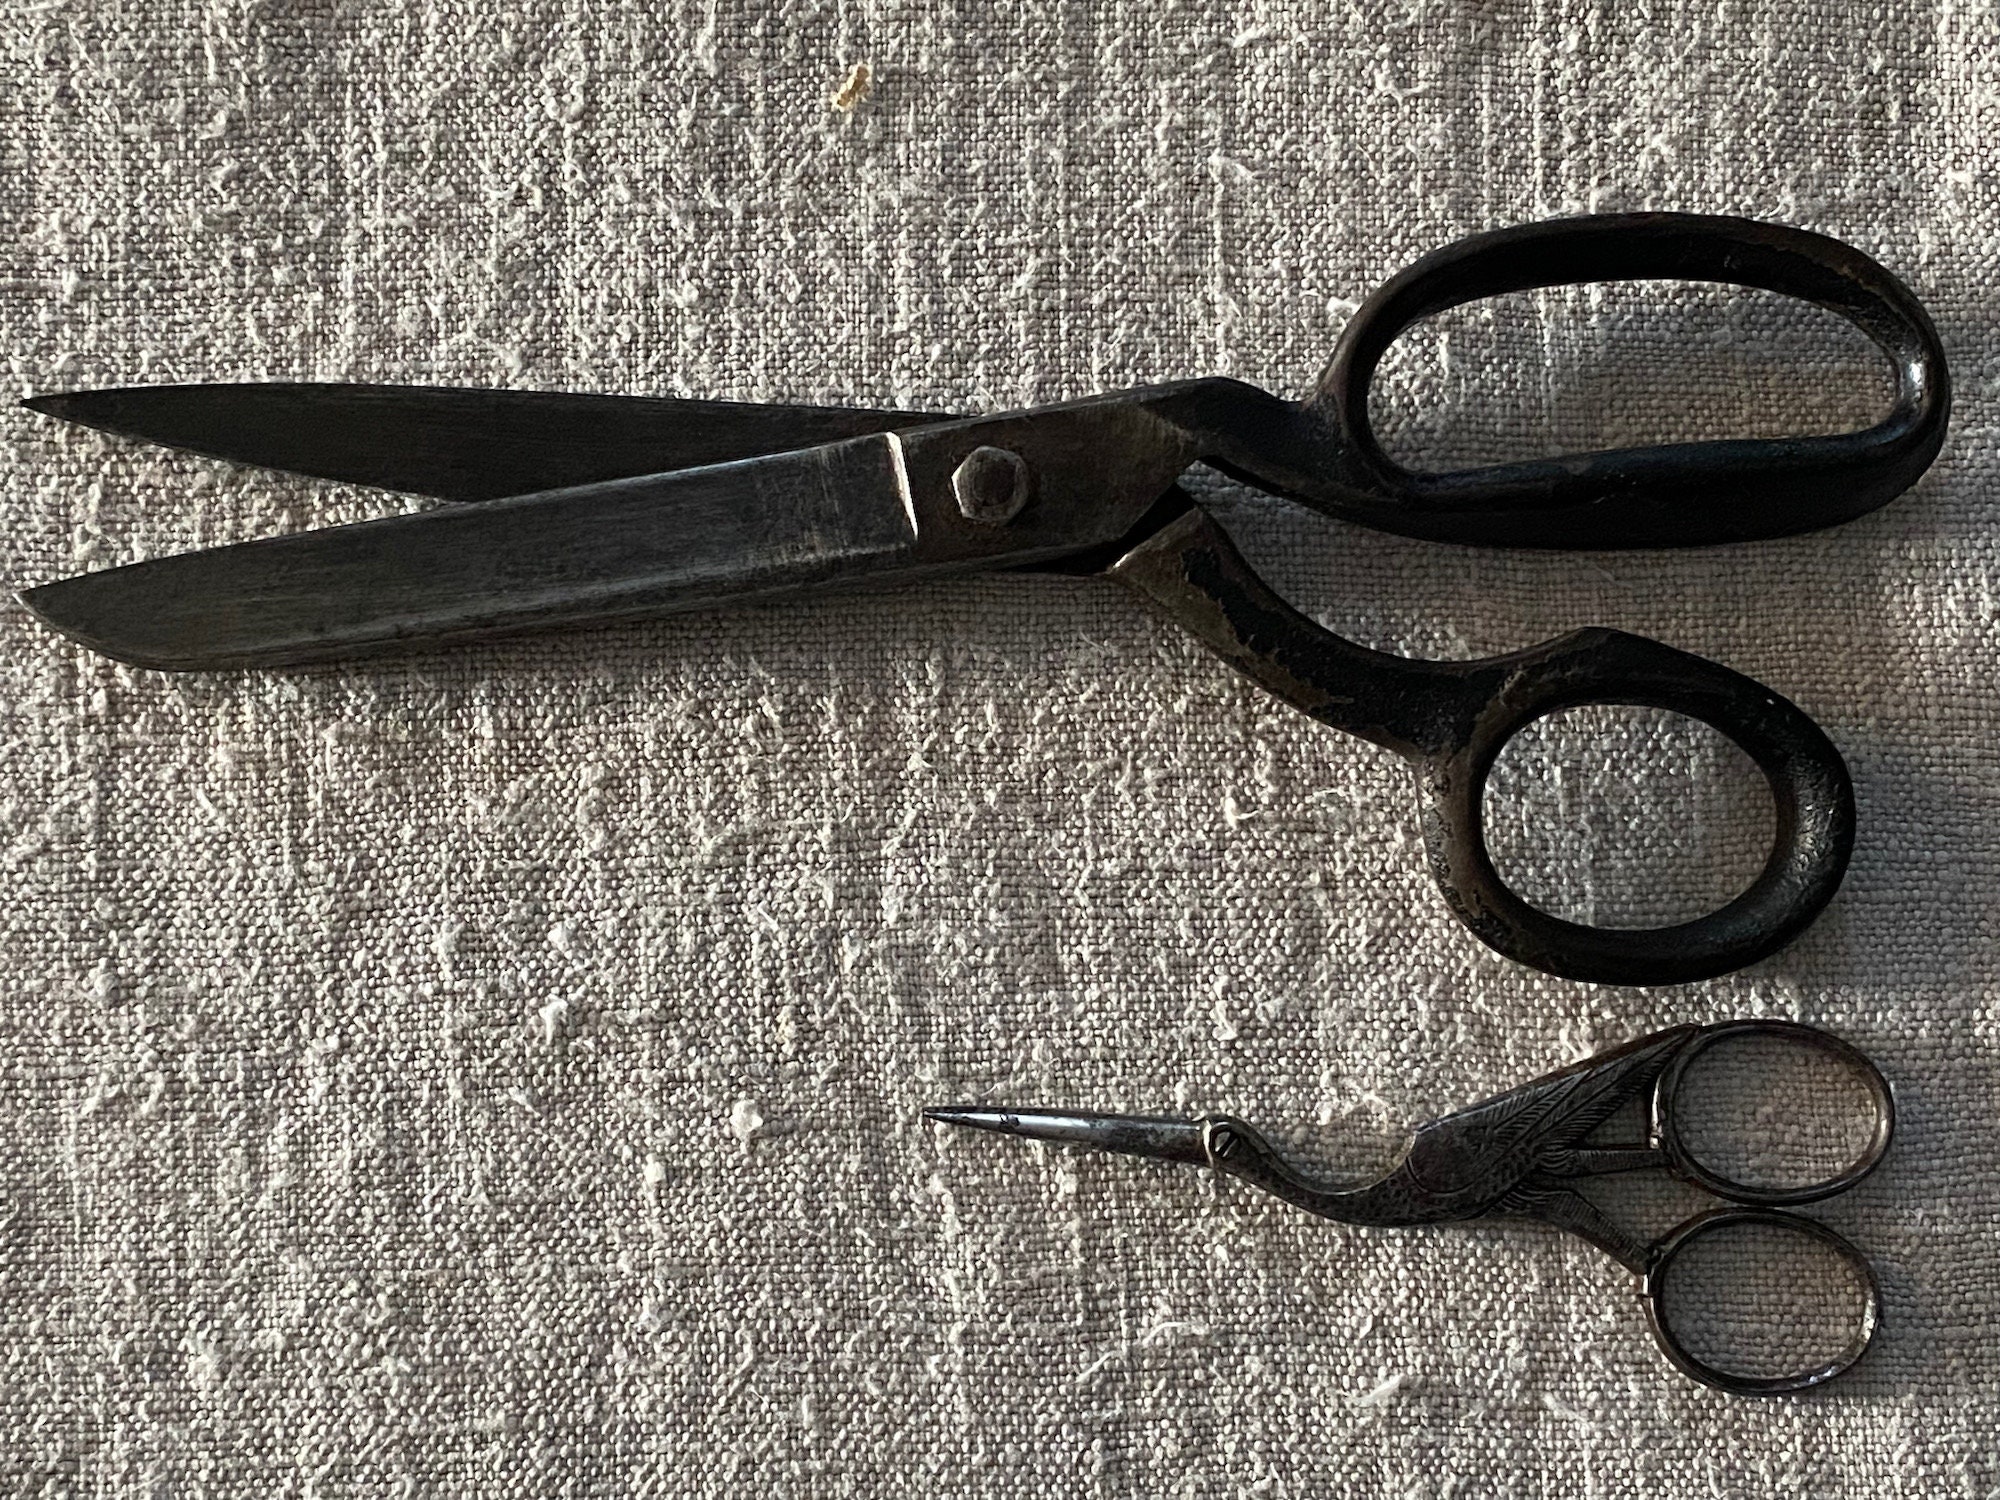 Cutex 12 Razor Edge Bent Trimmer Fabric Sewing Shears Scissors